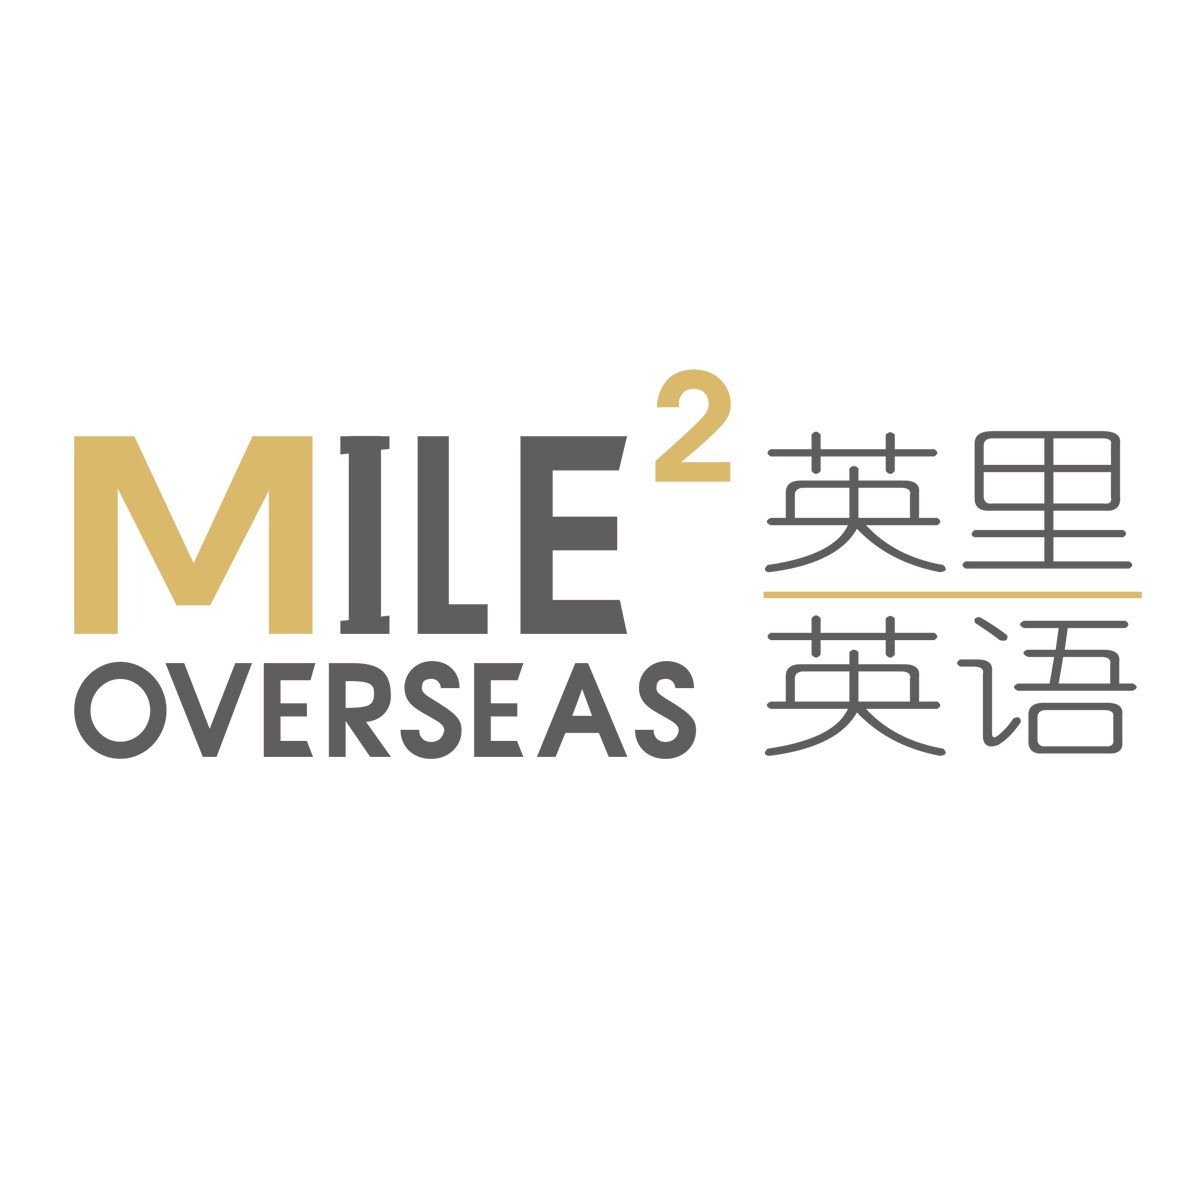 Mile2overseas logo